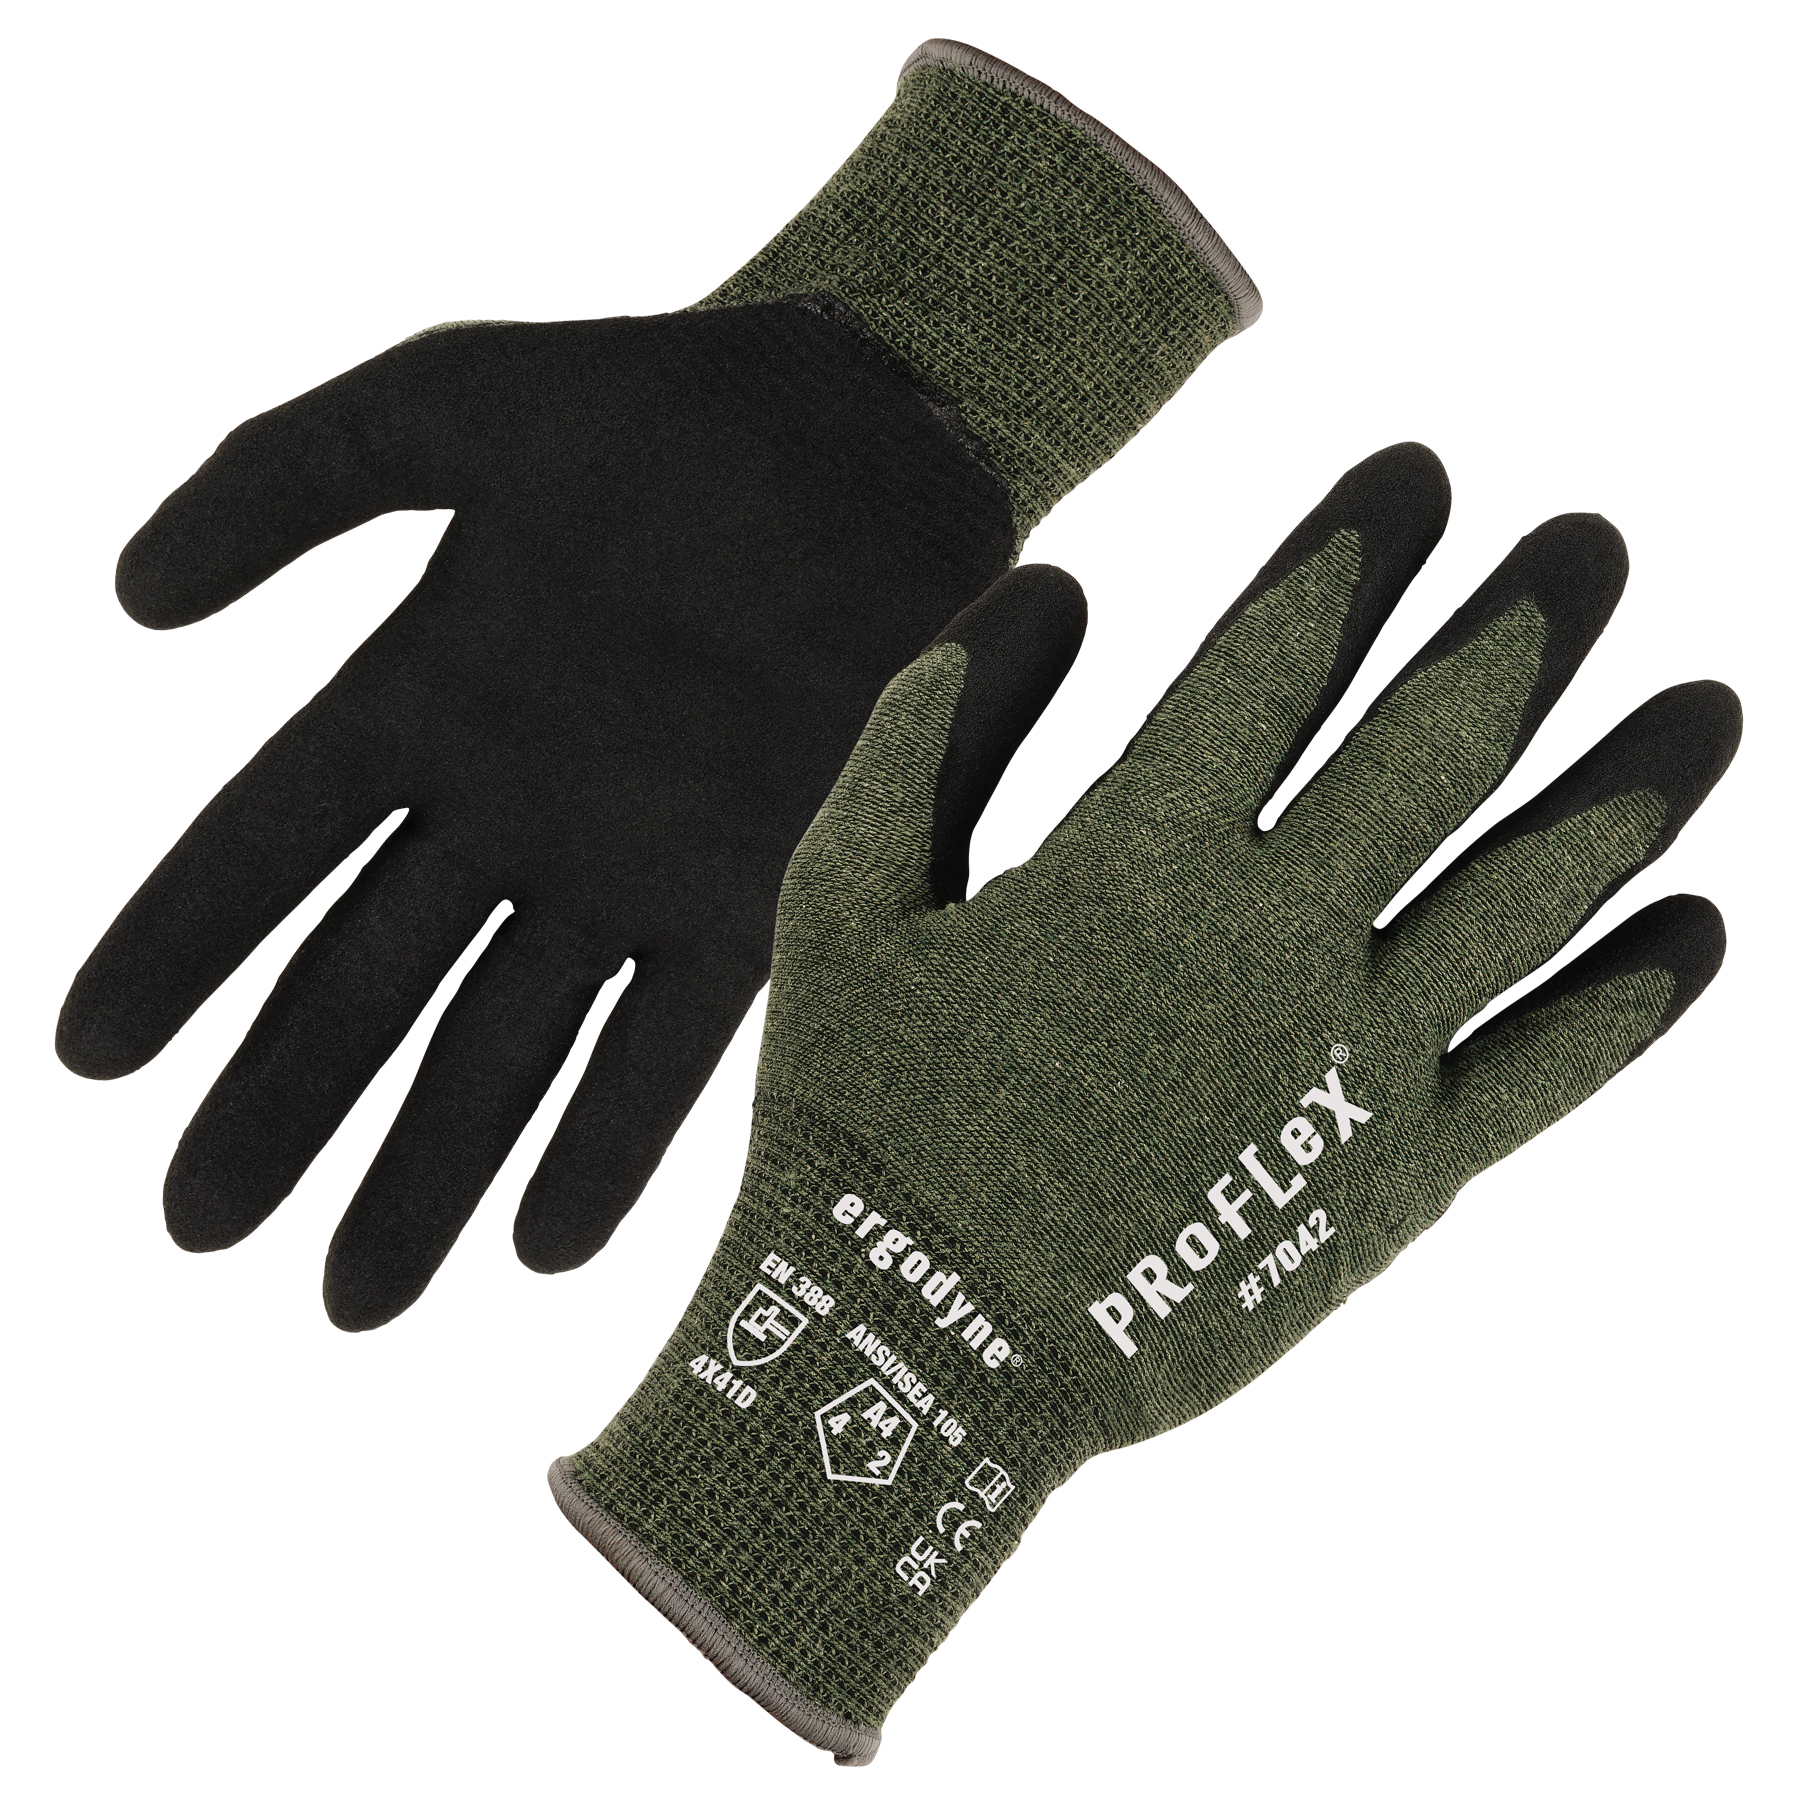 https://www.ergodyne.com/sites/default/files/product-images/10342-7042-ansi-a4-nitrile-coated-cr-gloves-grey-pair_1.jpg